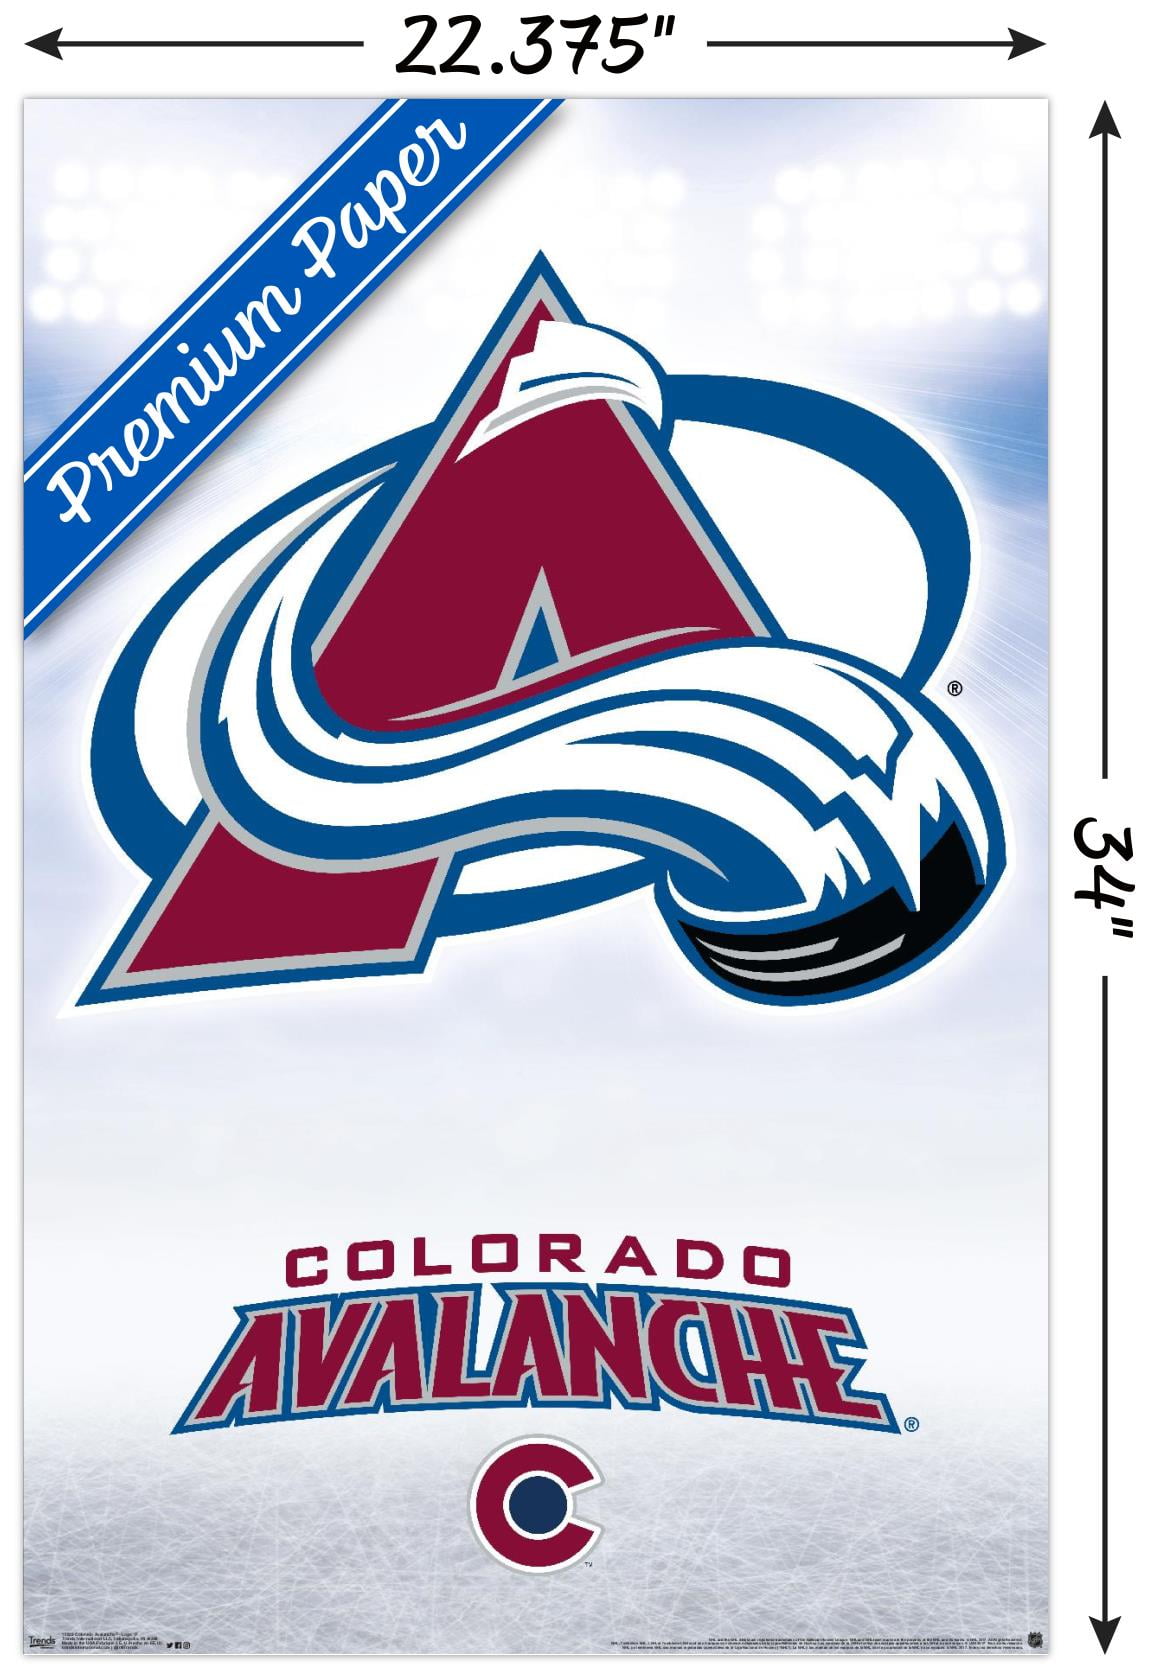 NHL Colorado Avalanche - Logo 17 Wall Poster, 22.375 x 34